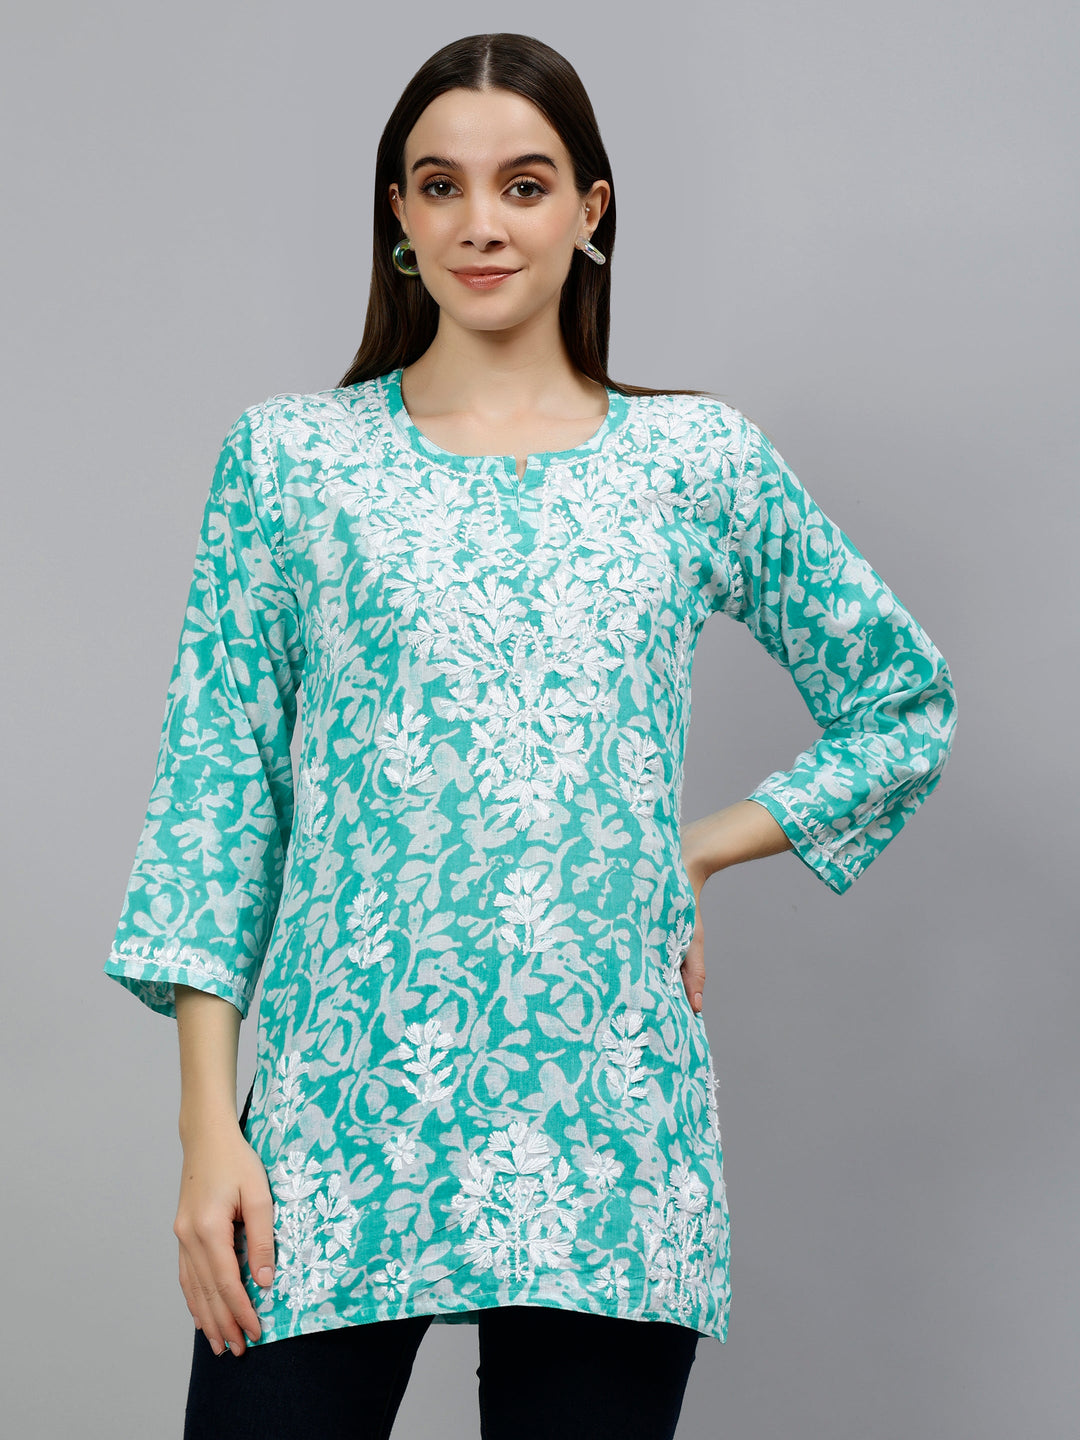 Sea Green Cotton Lucknowi Chikankari Women's Short Tunic